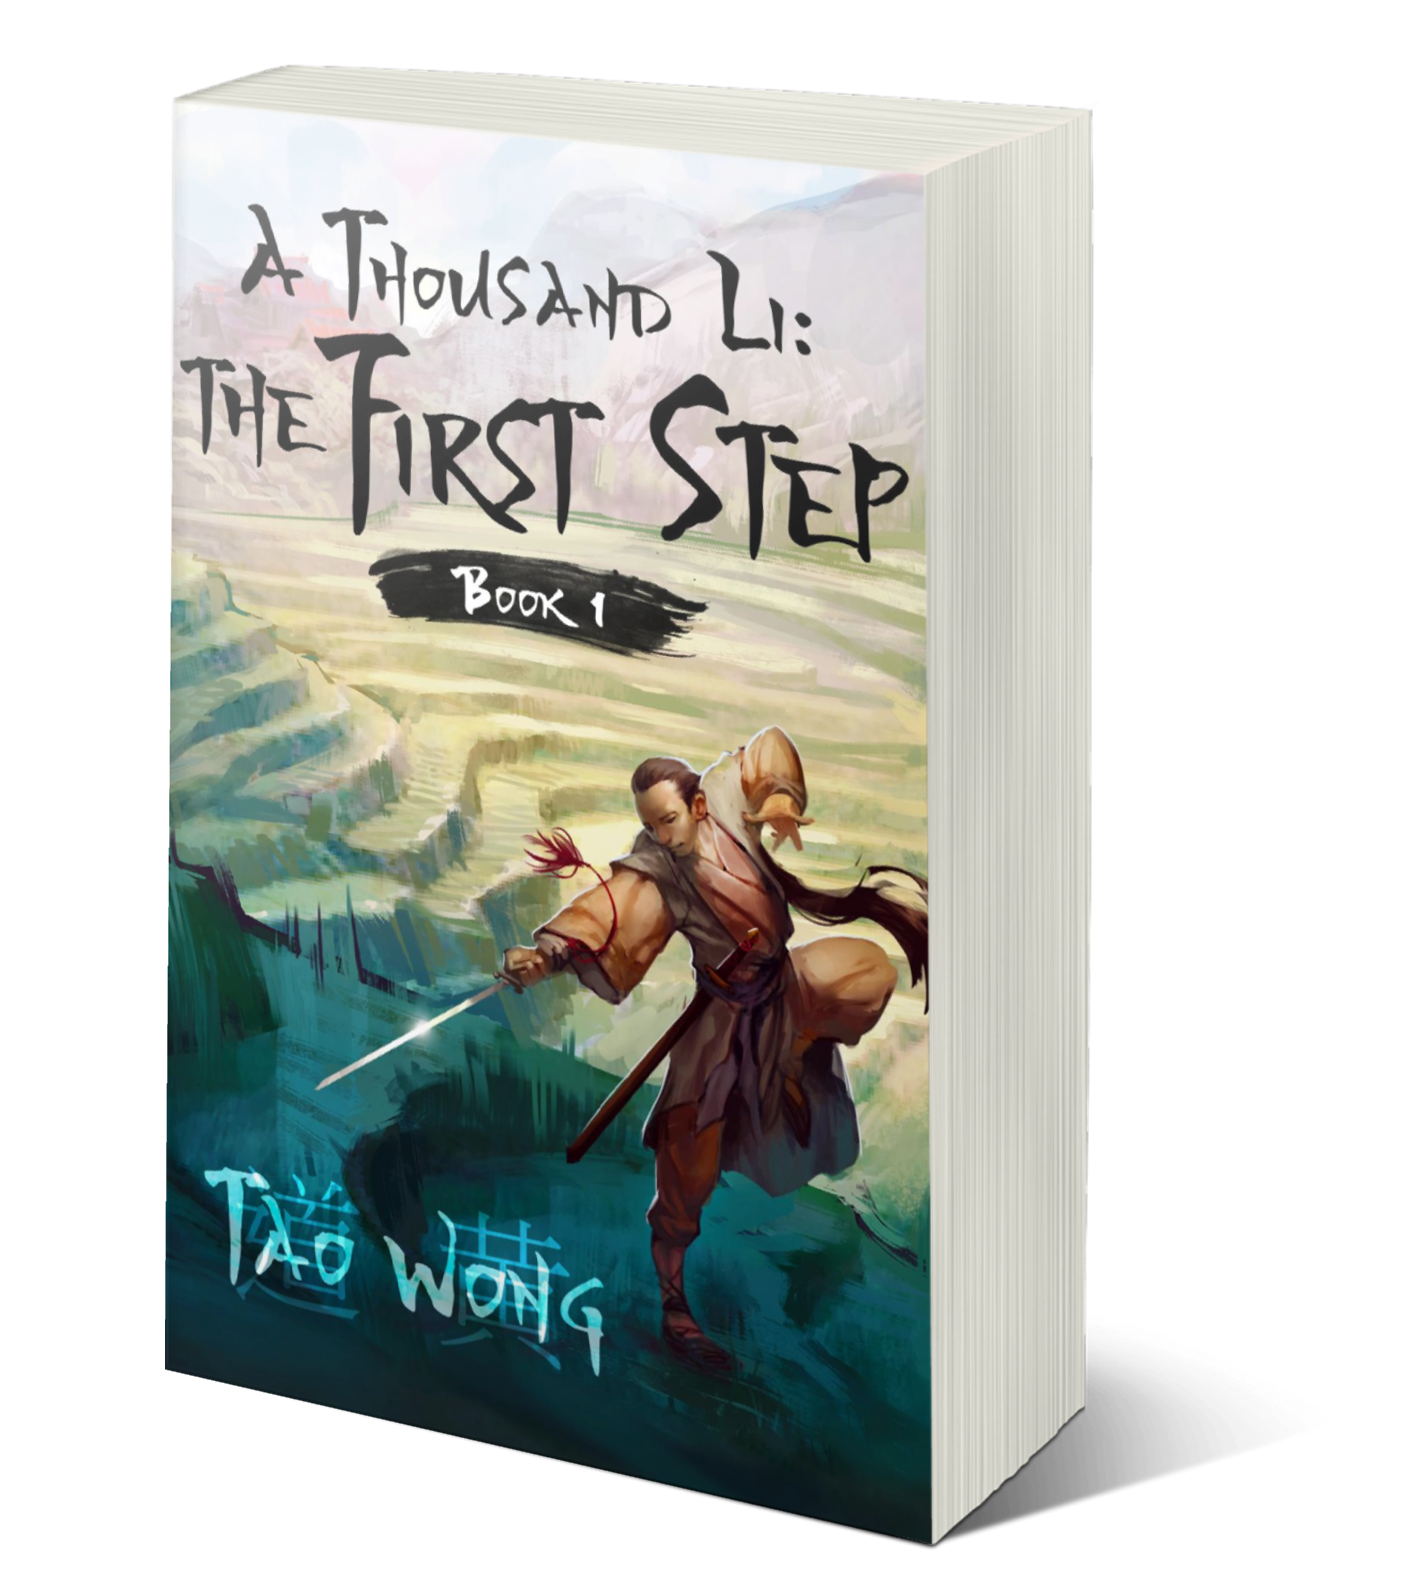 The First Step (A Thousand Li #1)